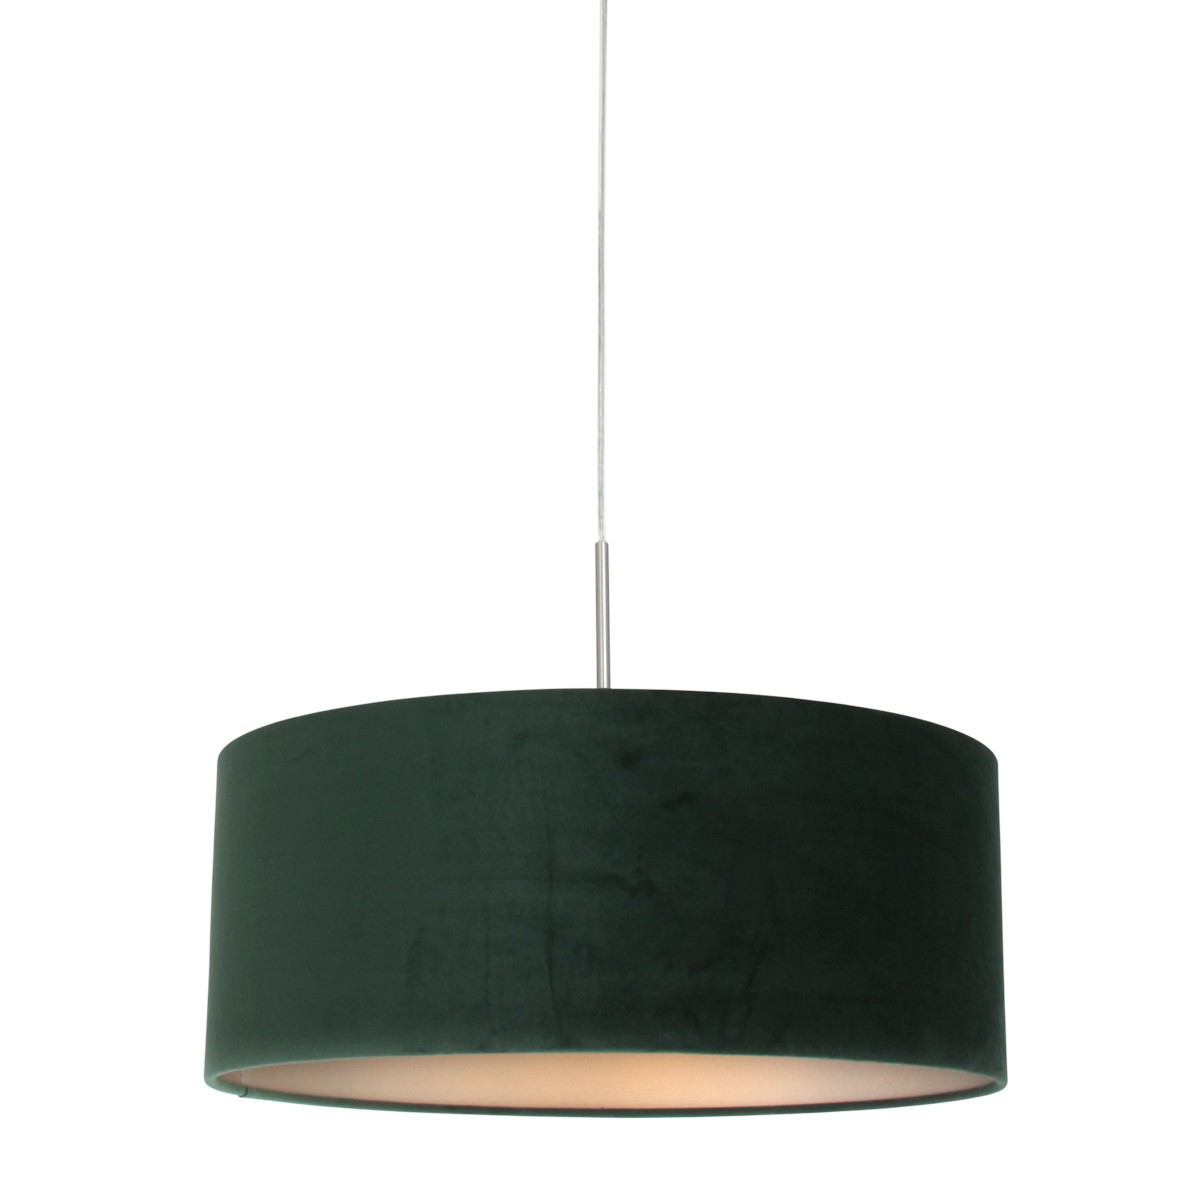 hanglamp-met-ronde-groene-kap-steinhauer-sparkled-light-8148st